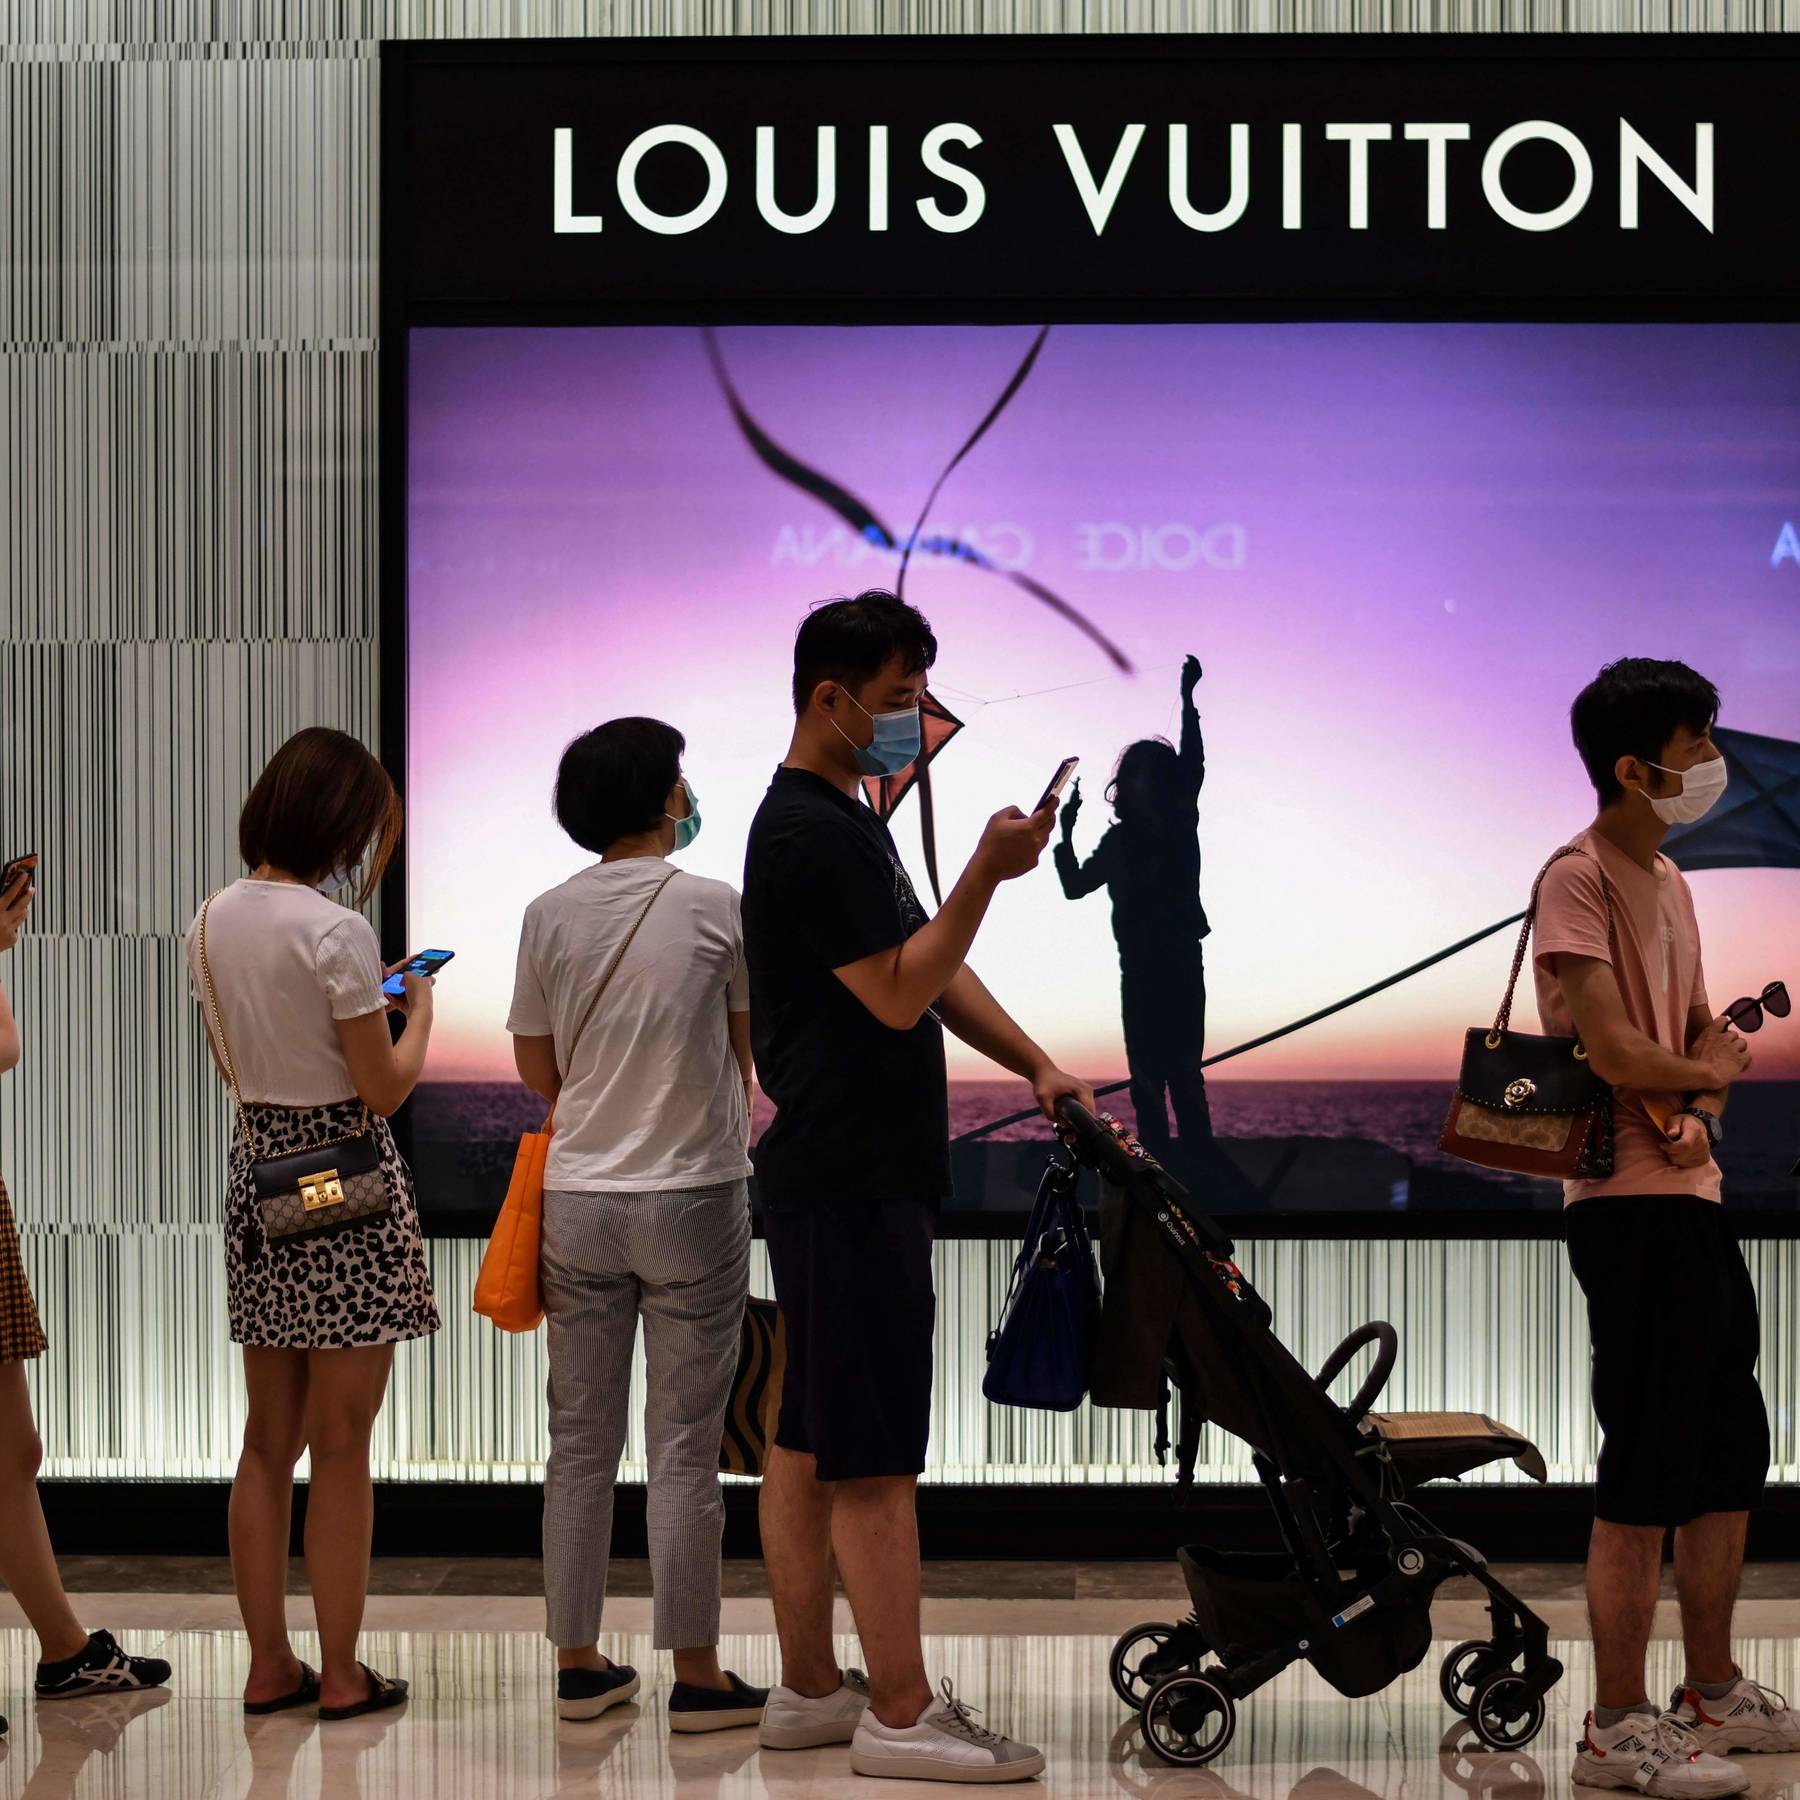 LVMH annual fashion sales surge 47 per cent on US, China